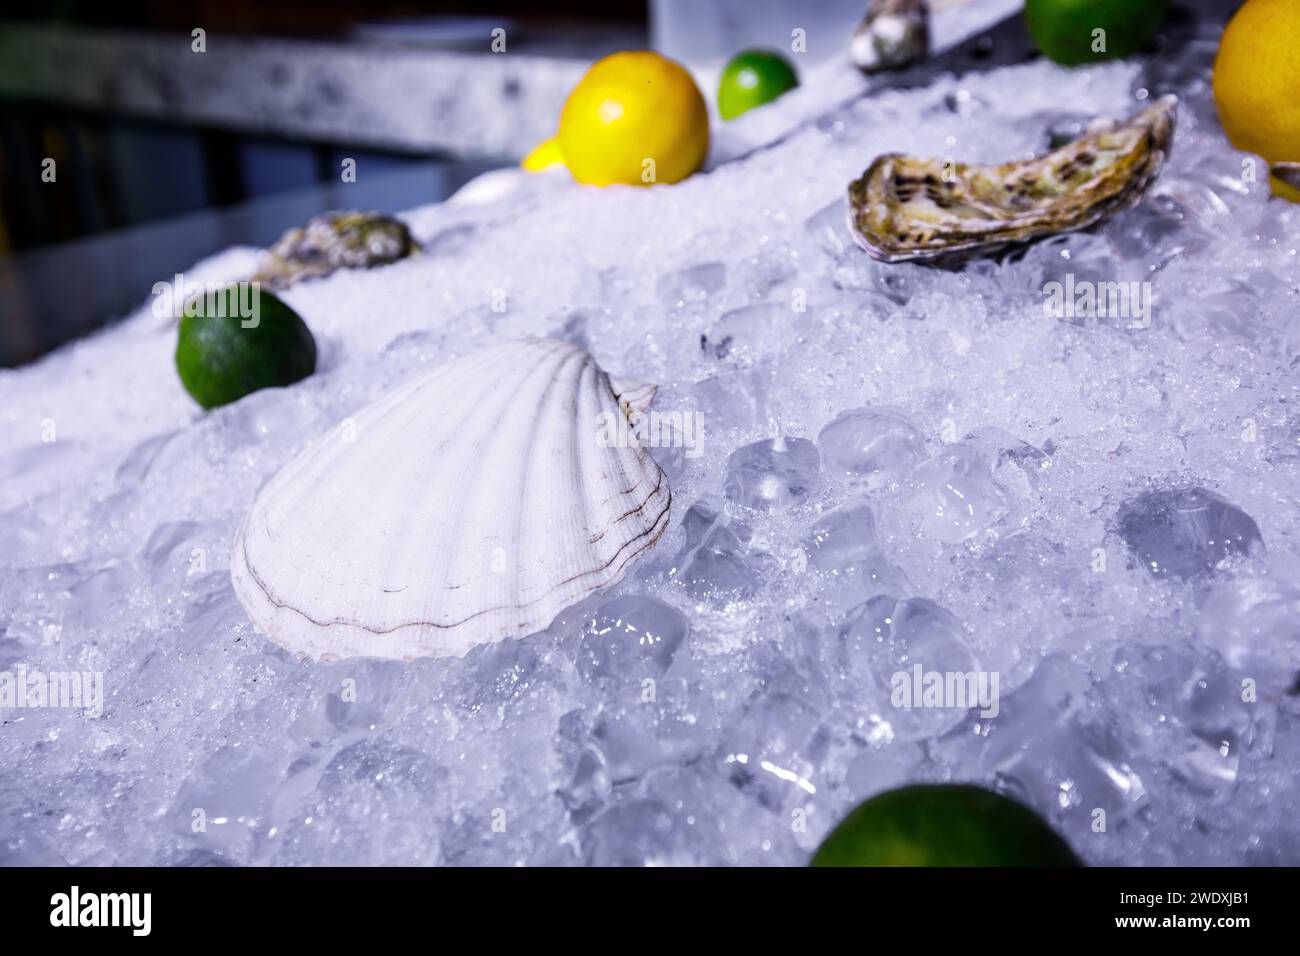 ostriche naldu al chiuso, limone e luce. Foto di alta qualità Foto Stock